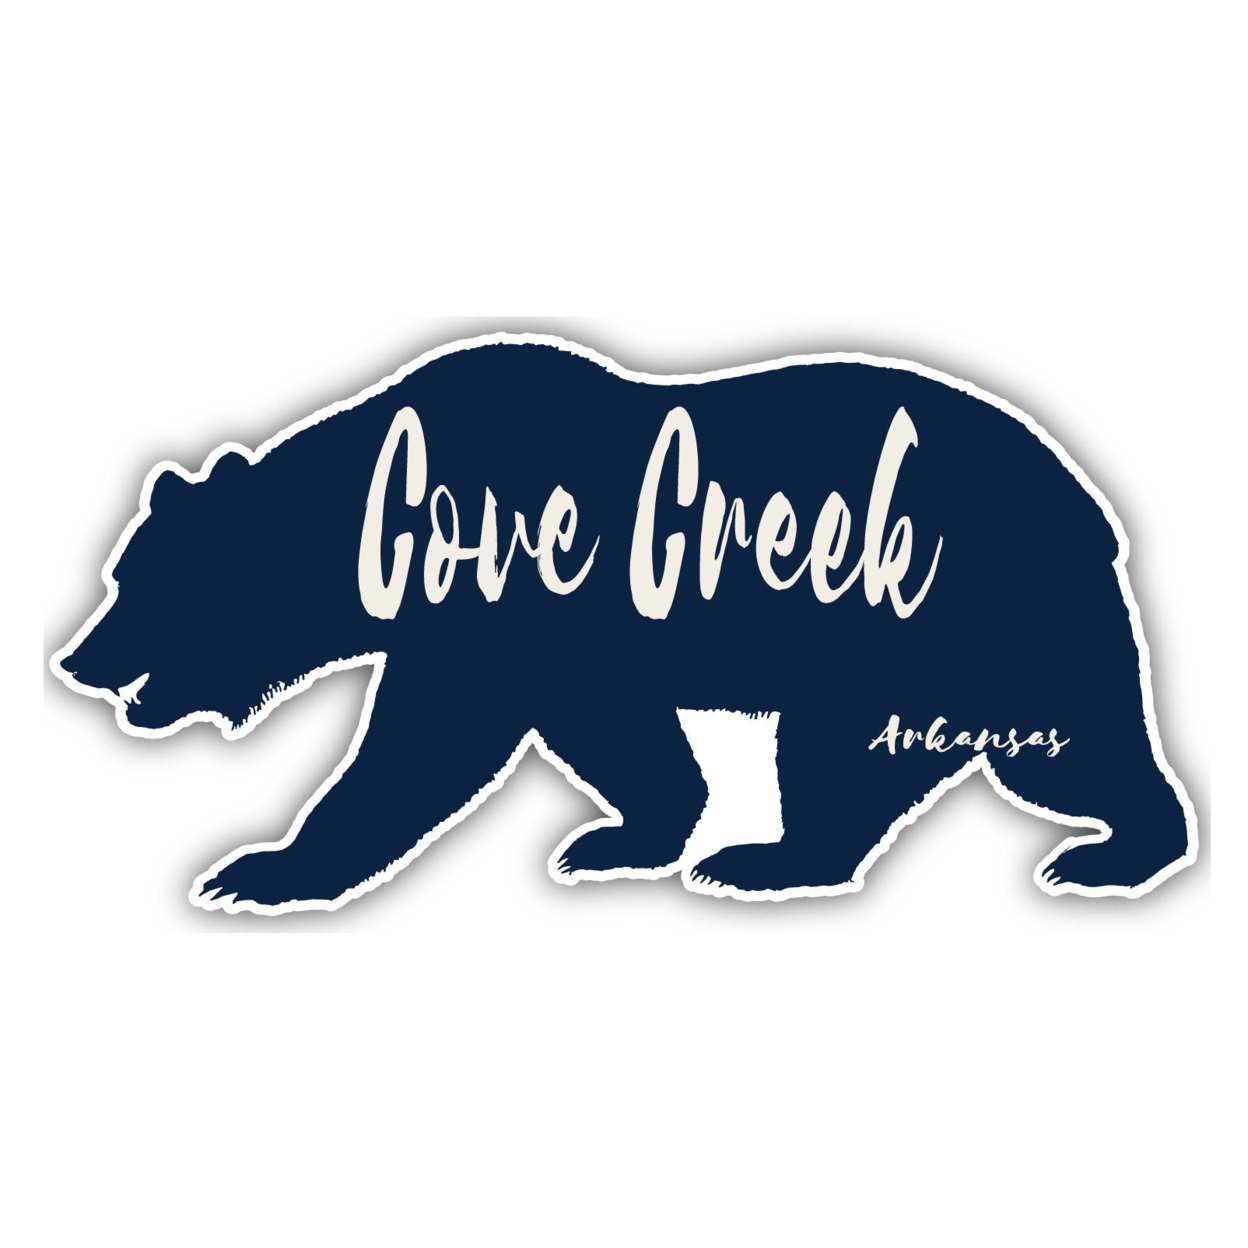 Cove Creek Arkansas Souvenir Decorative Stickers (Choose Theme And Size) - Single Unit, 12-Inch, Bear